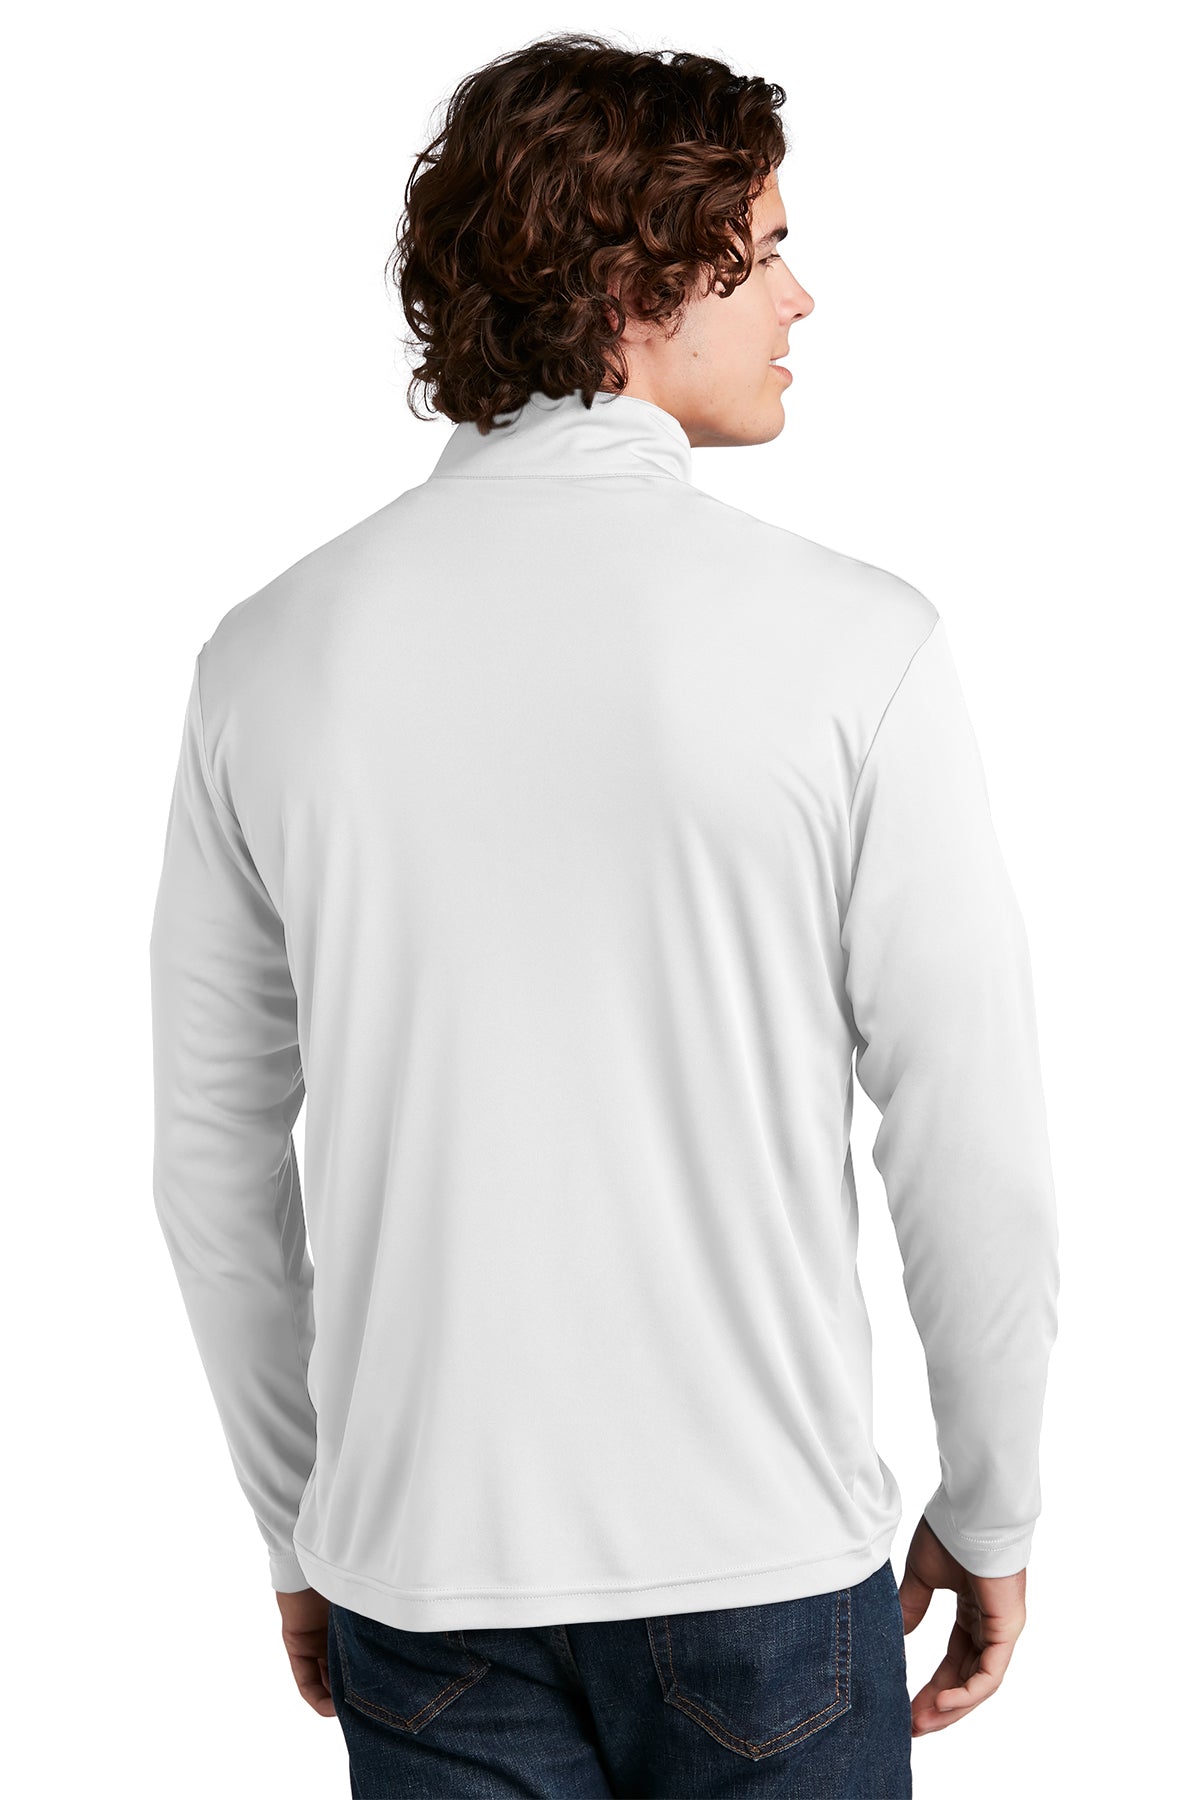 sport-tek_st357 _white_company_logo_sweatshirts